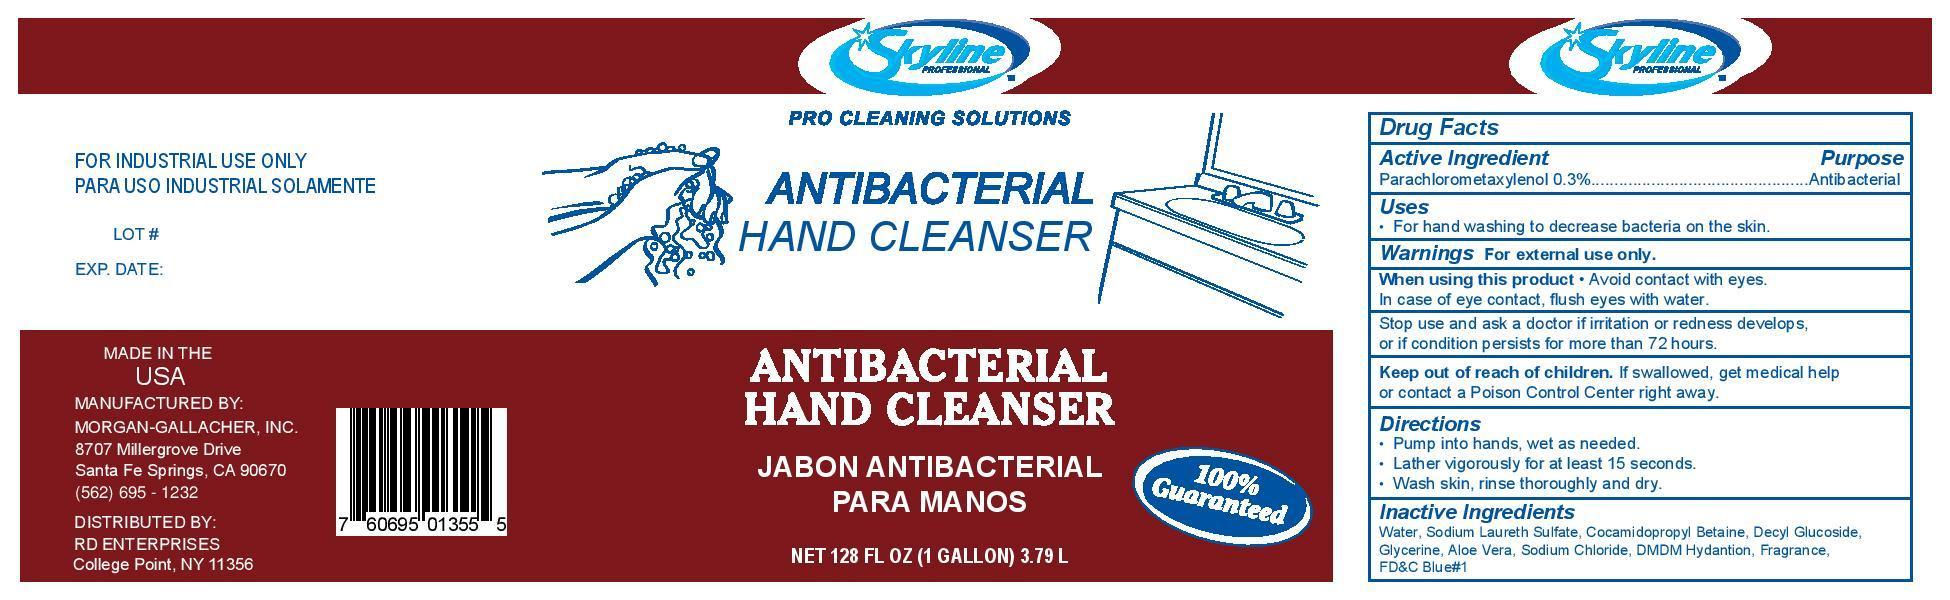 Skyline Antibacterial Hand Cleanser